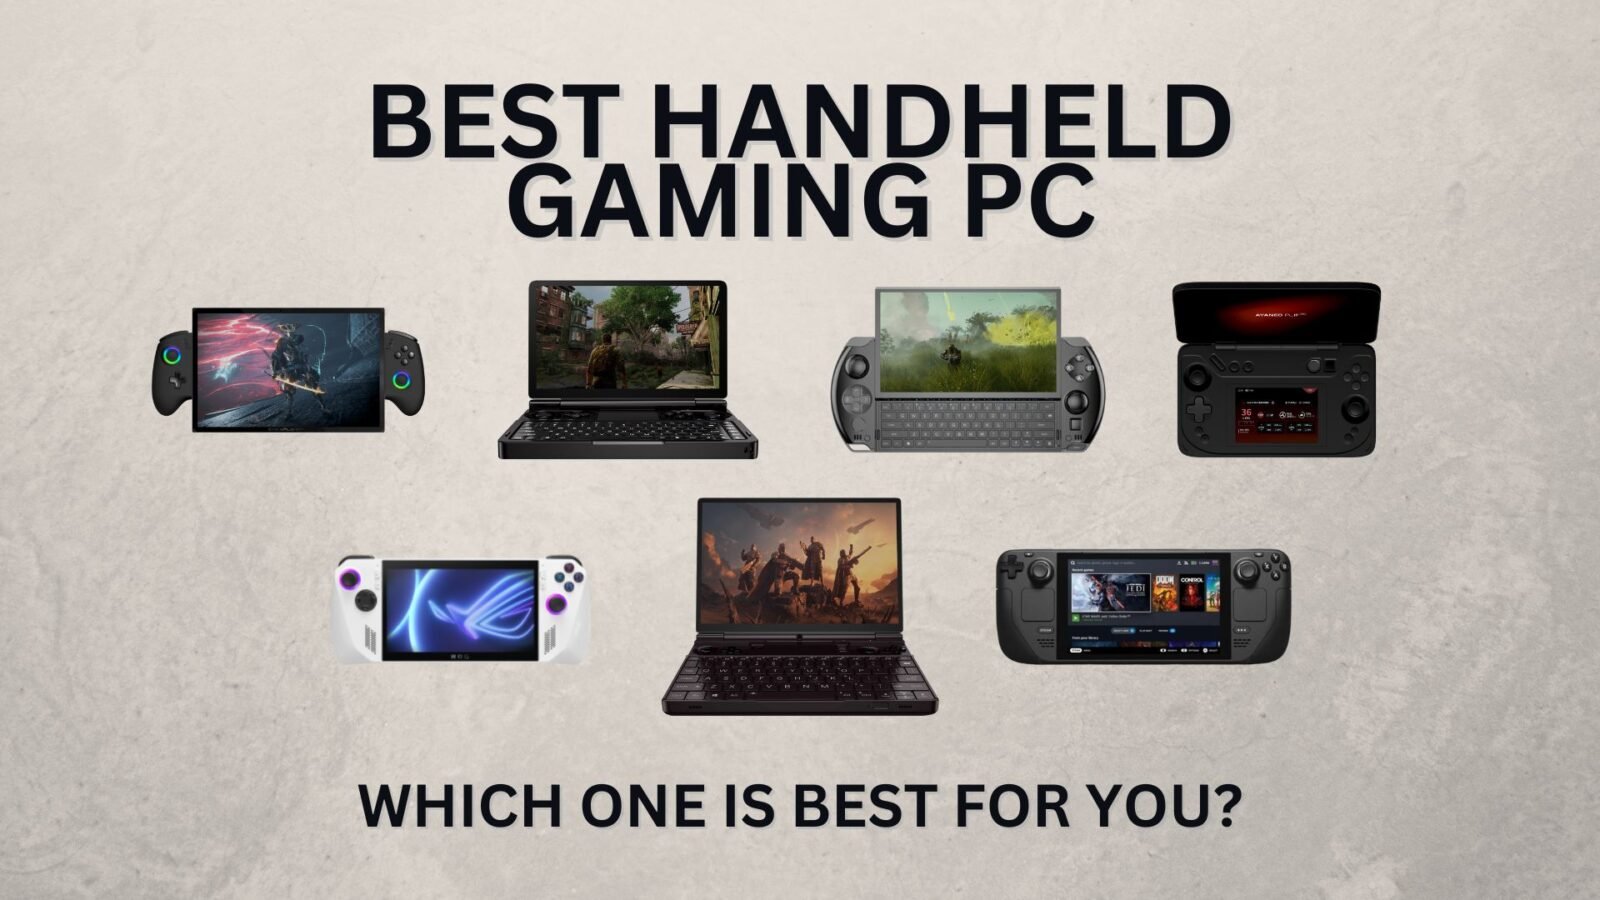 Best handheld gaming PC